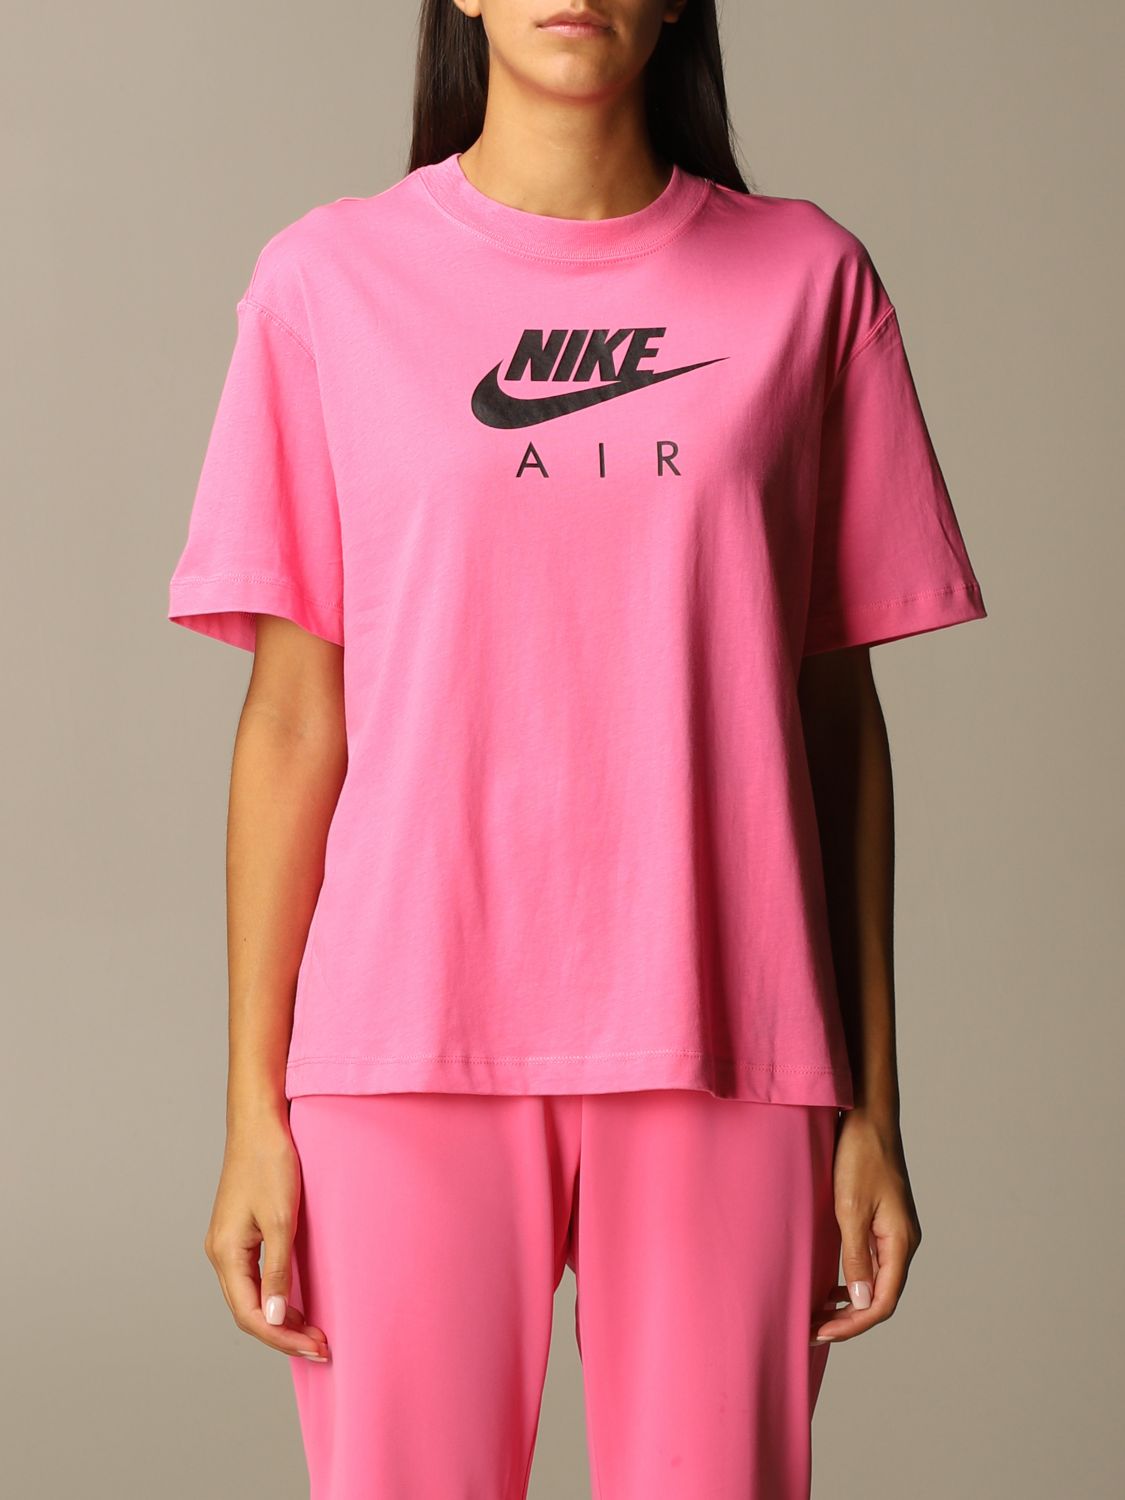 Camiseta Nike Rosa Mujer Baratas Online - camisetas nike roblox 77 descuento www vantravel com ar